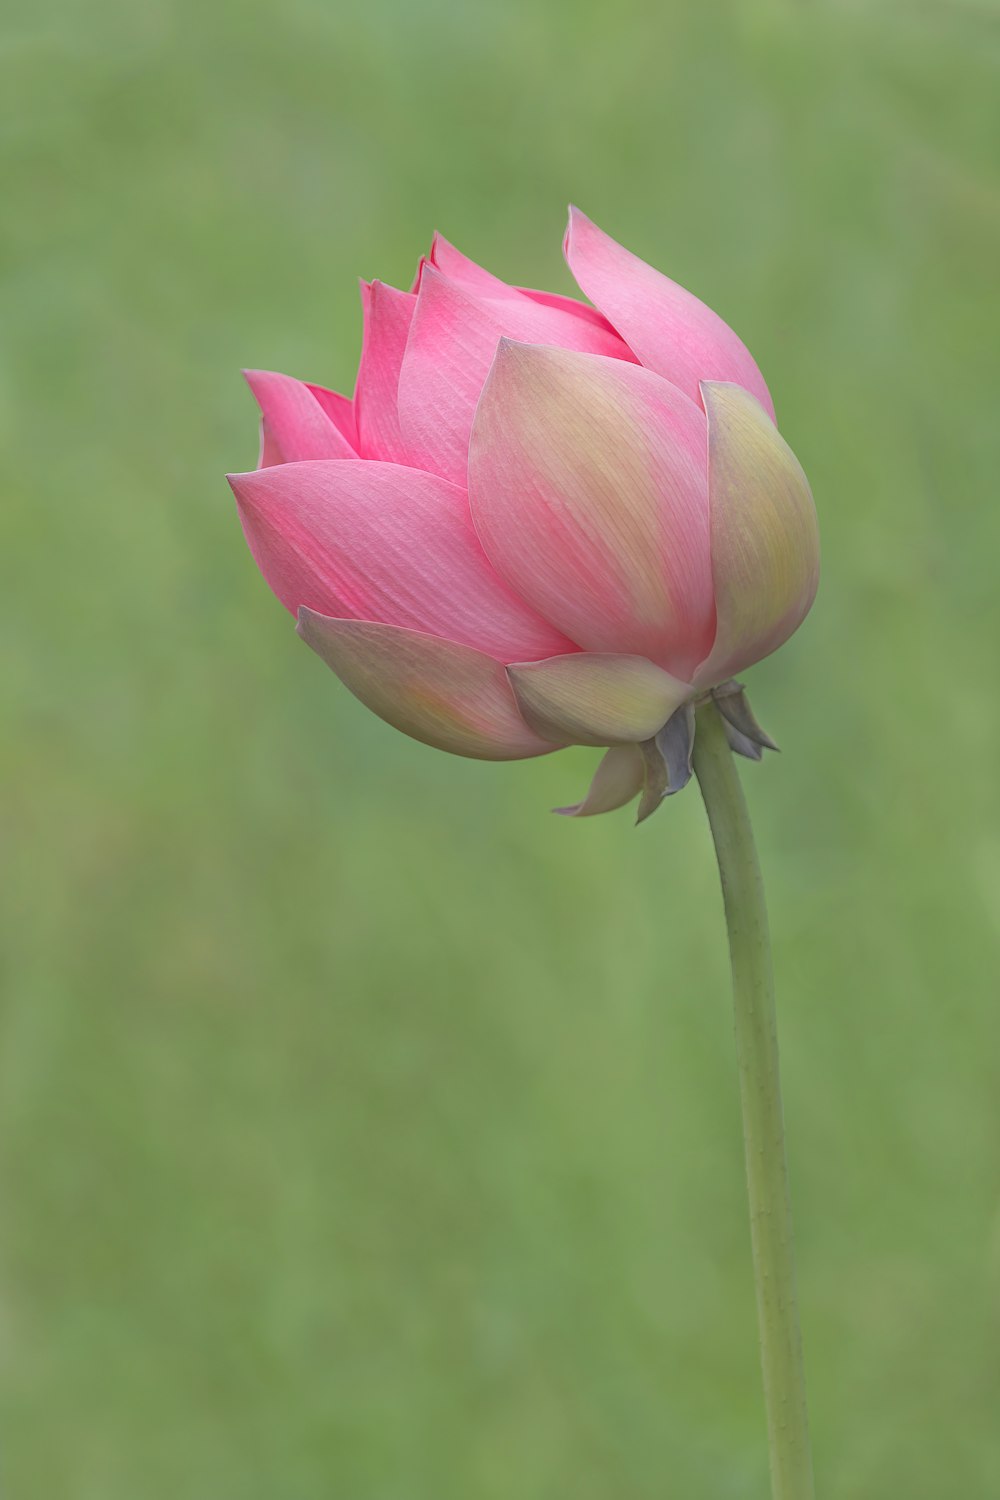 a pink flower on a stem